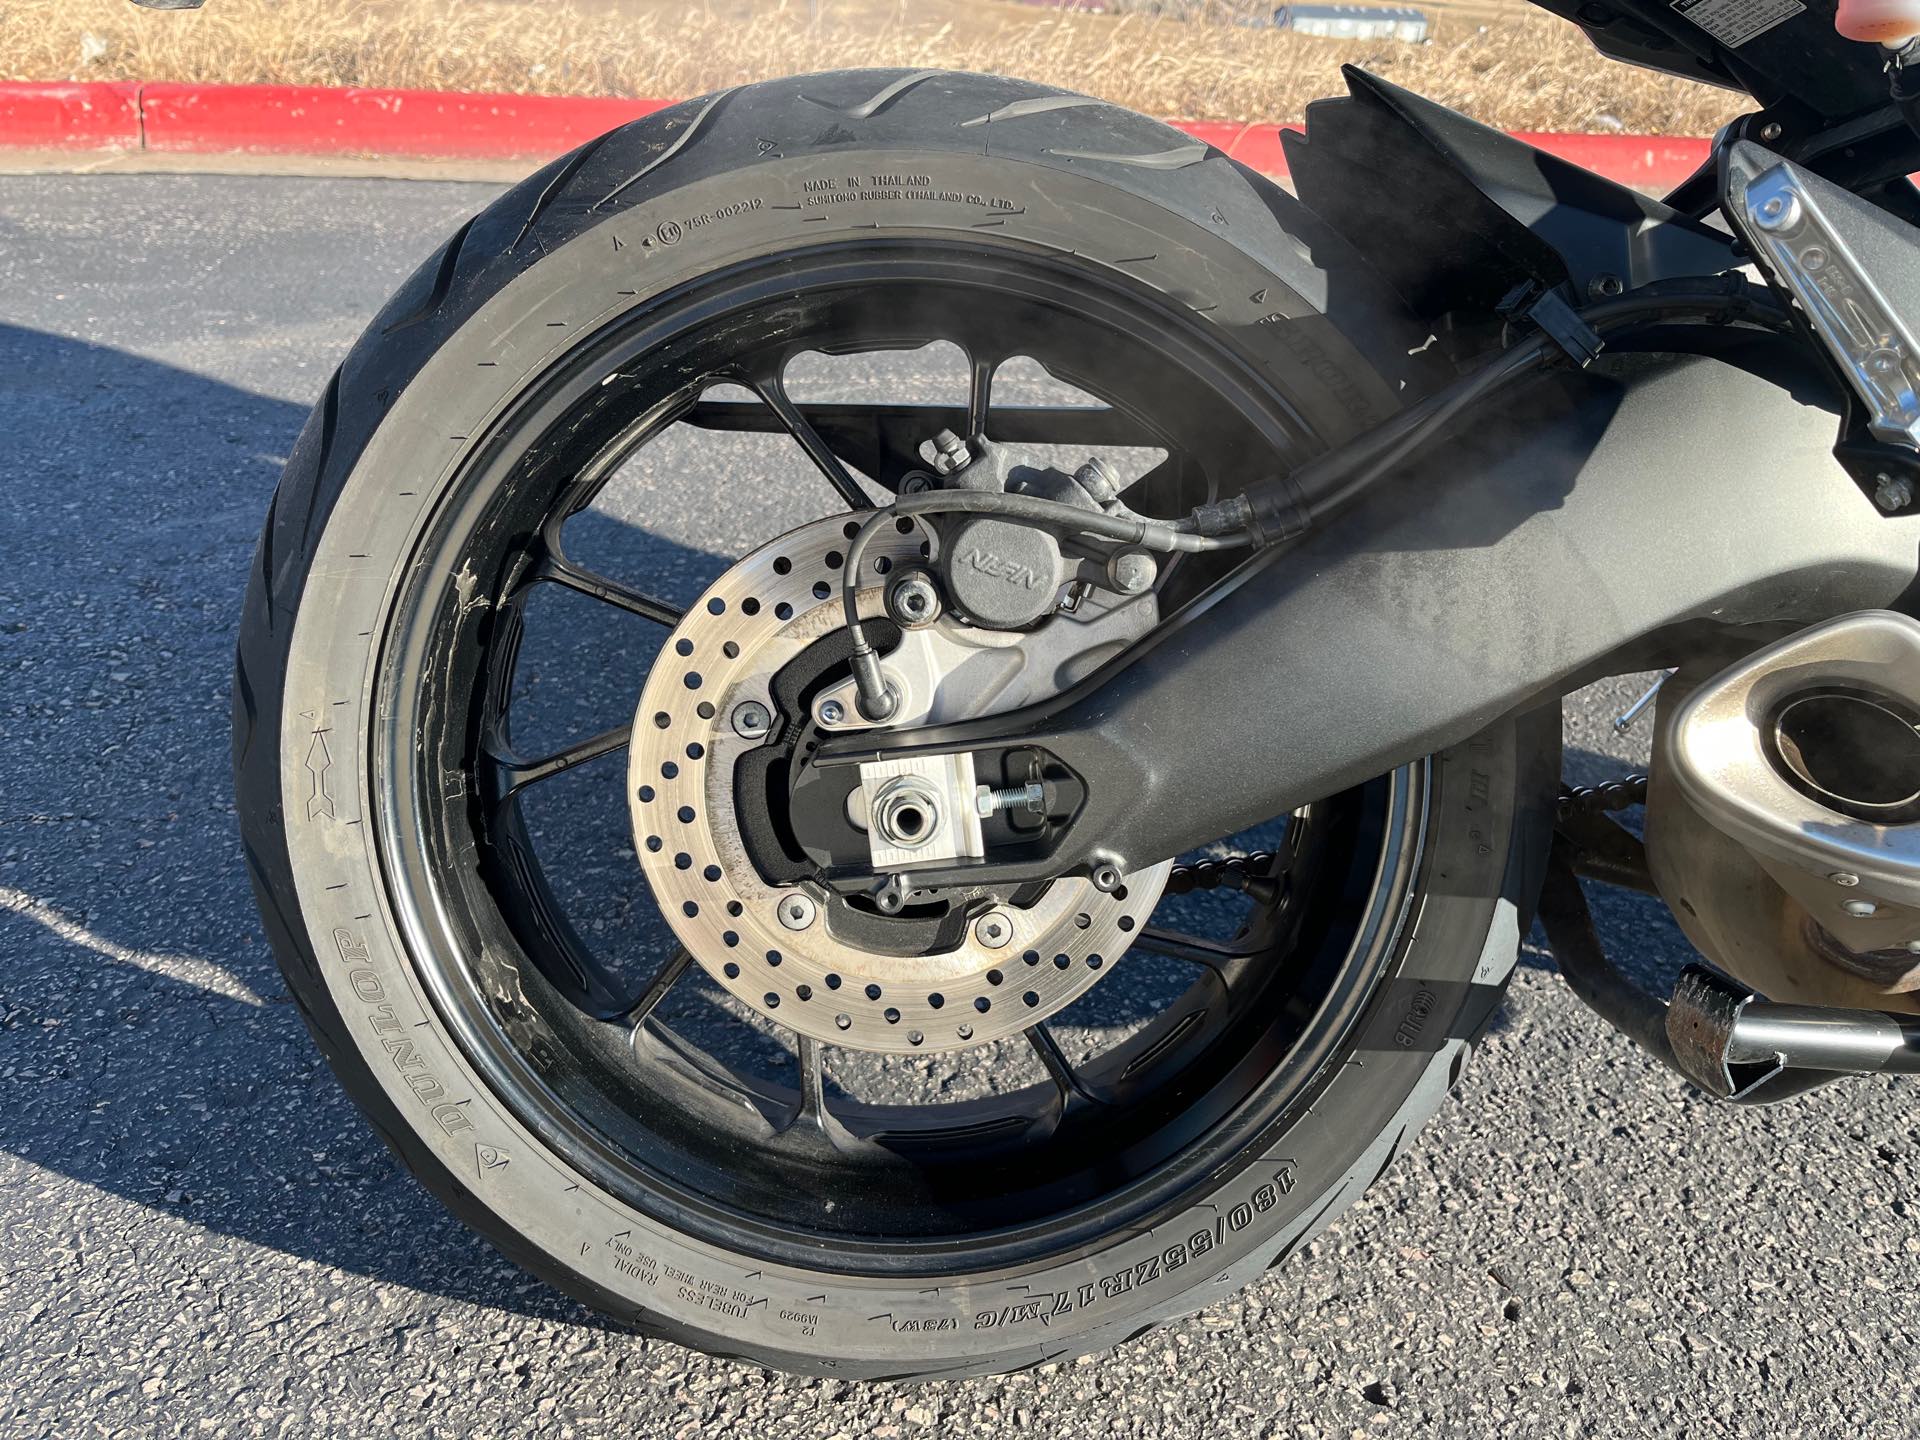 2019 Yamaha Tracer 900 at Mount Rushmore Motorsports